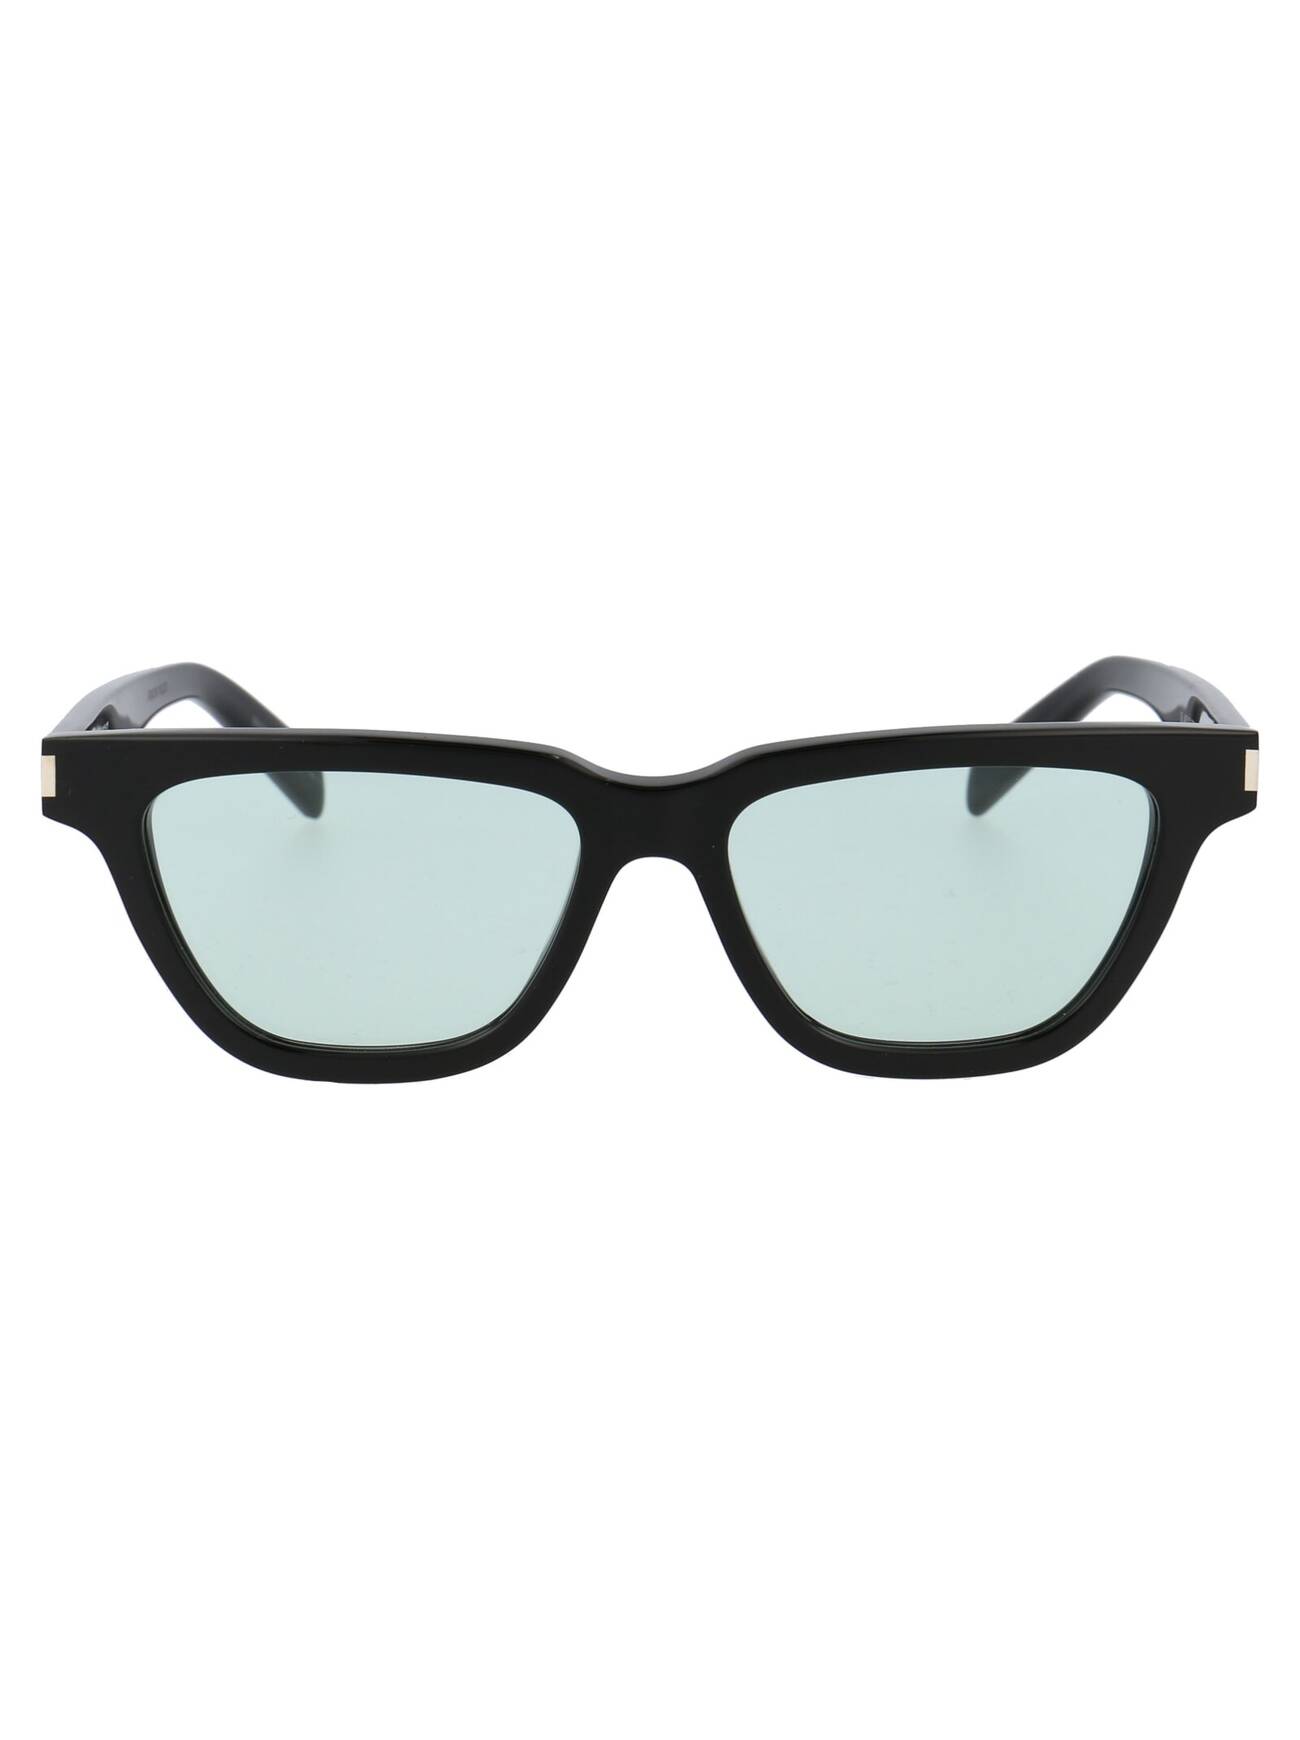 Saint Laurent Eyewear Sl 462 Sulpice Sunglasses in black / green